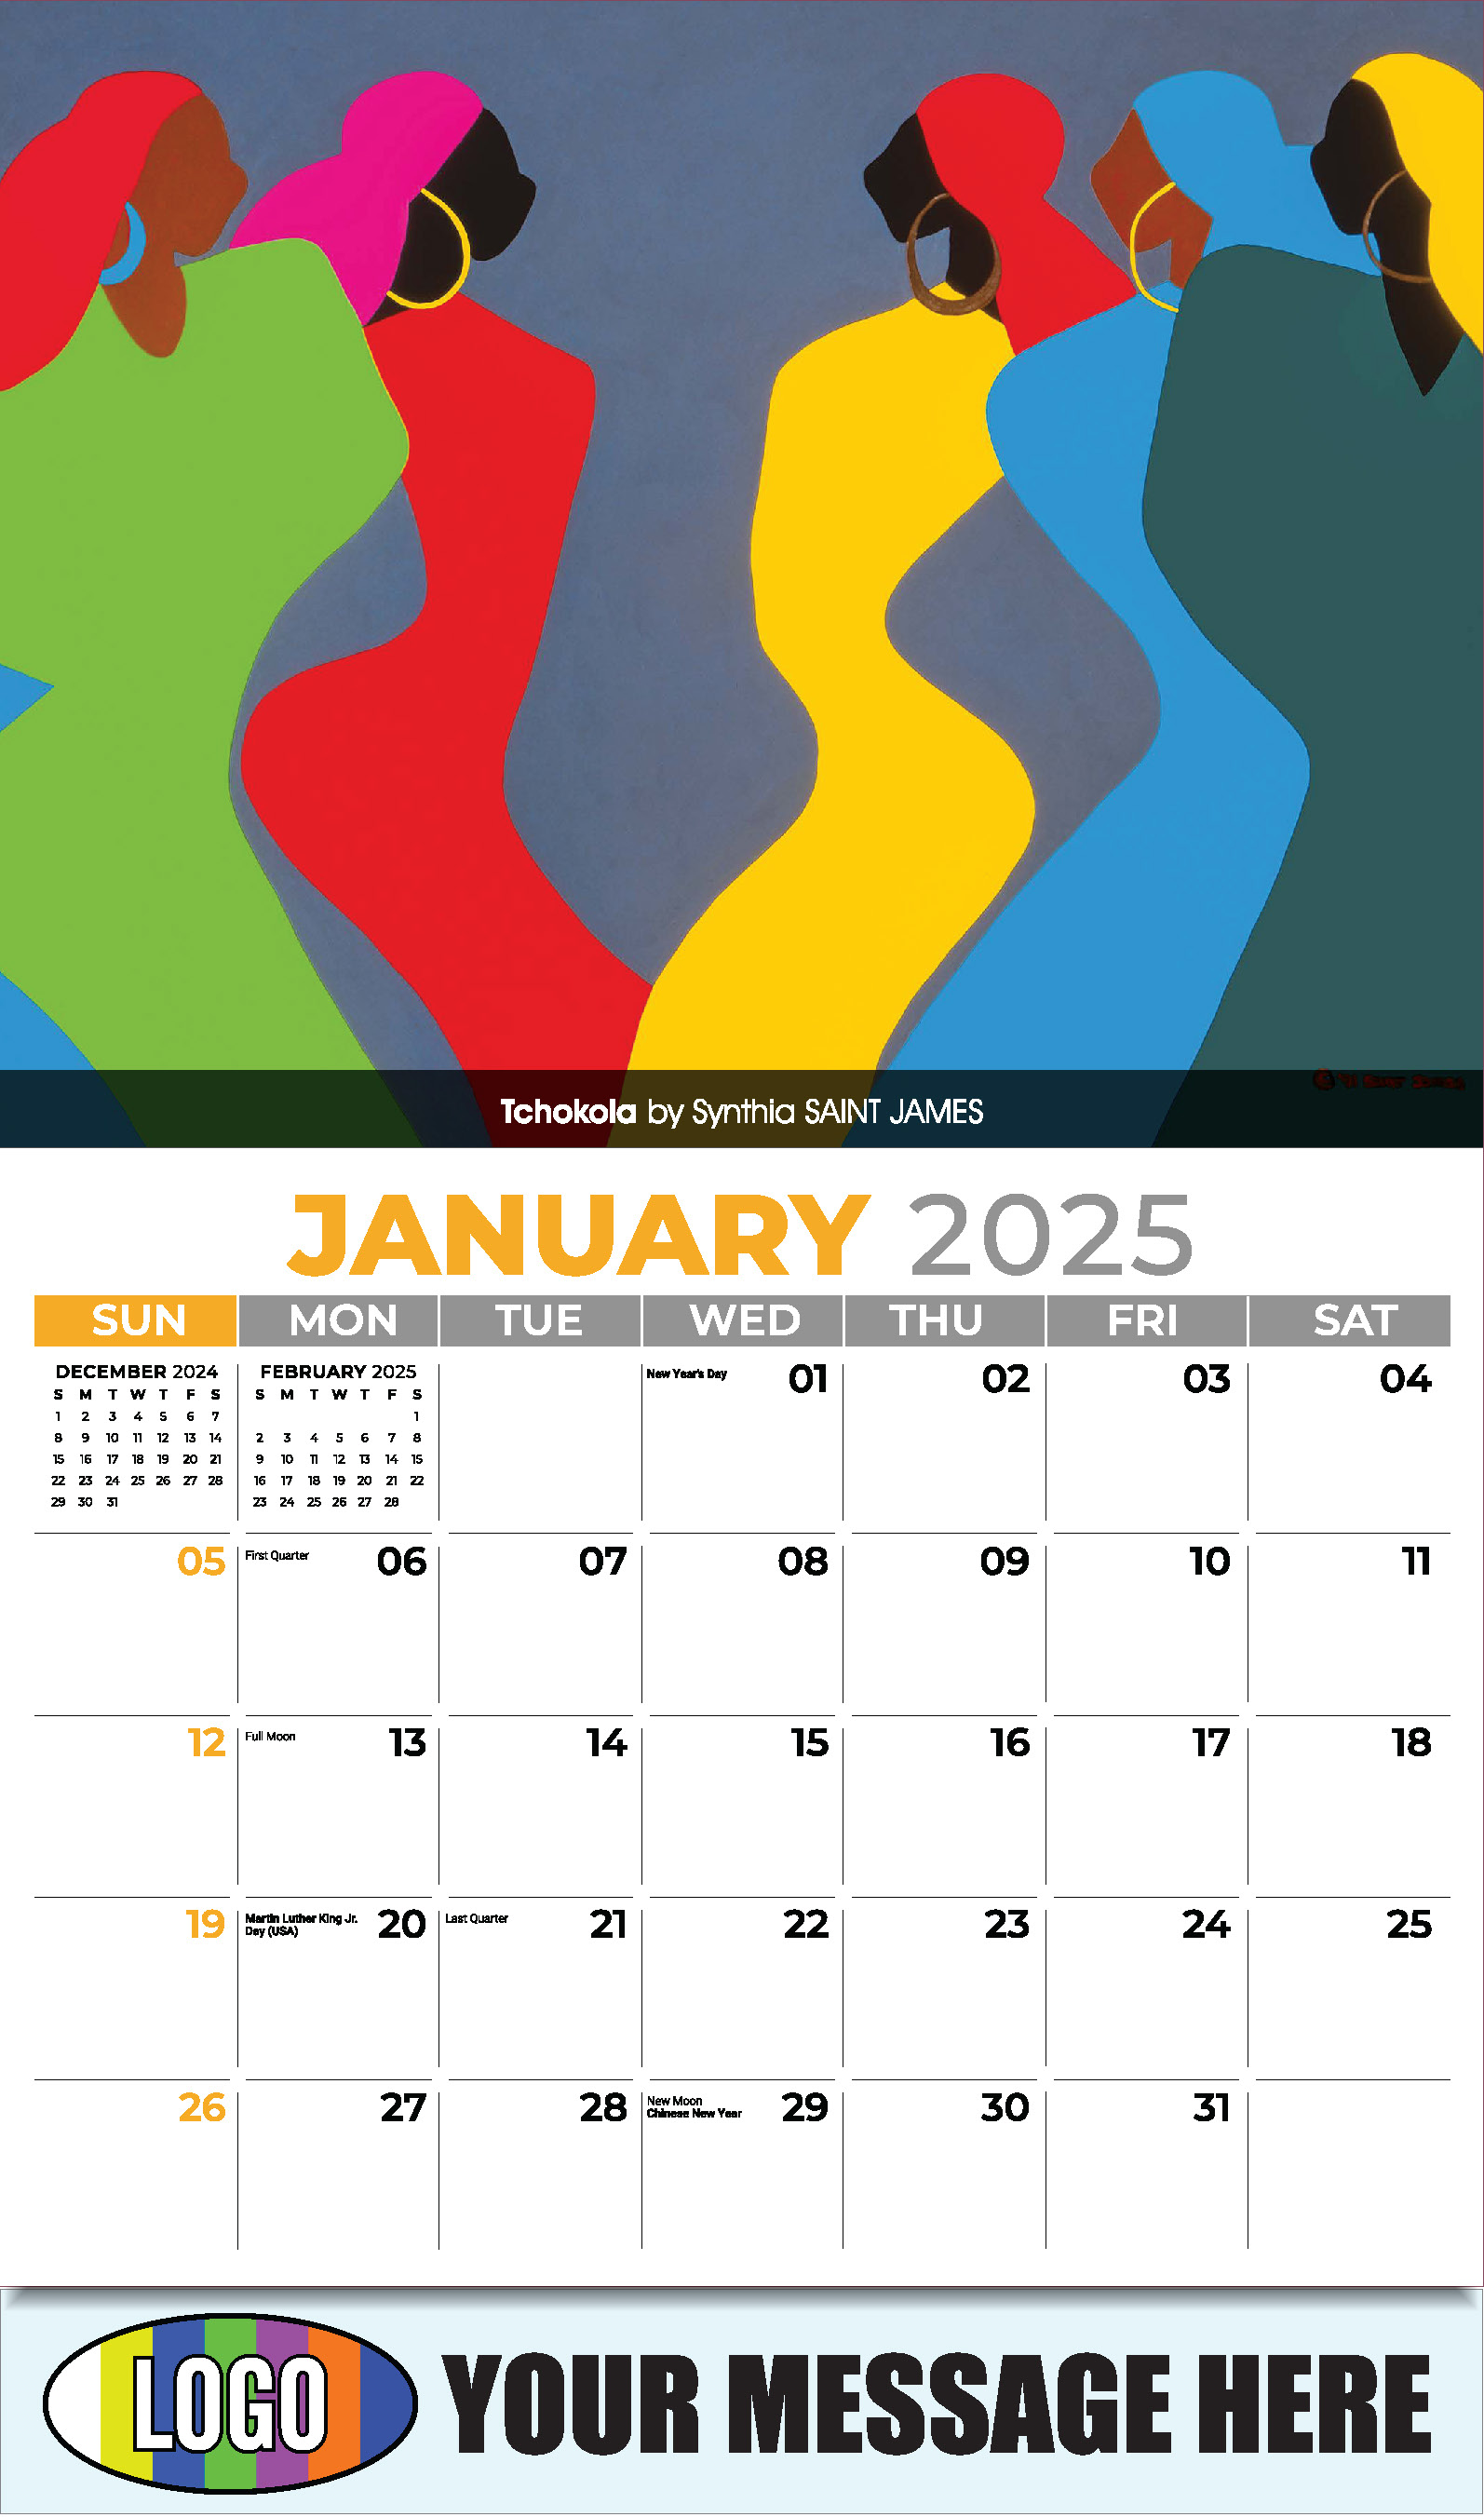 Celebration of African American Art 2025 Business Promotional Calendar - January